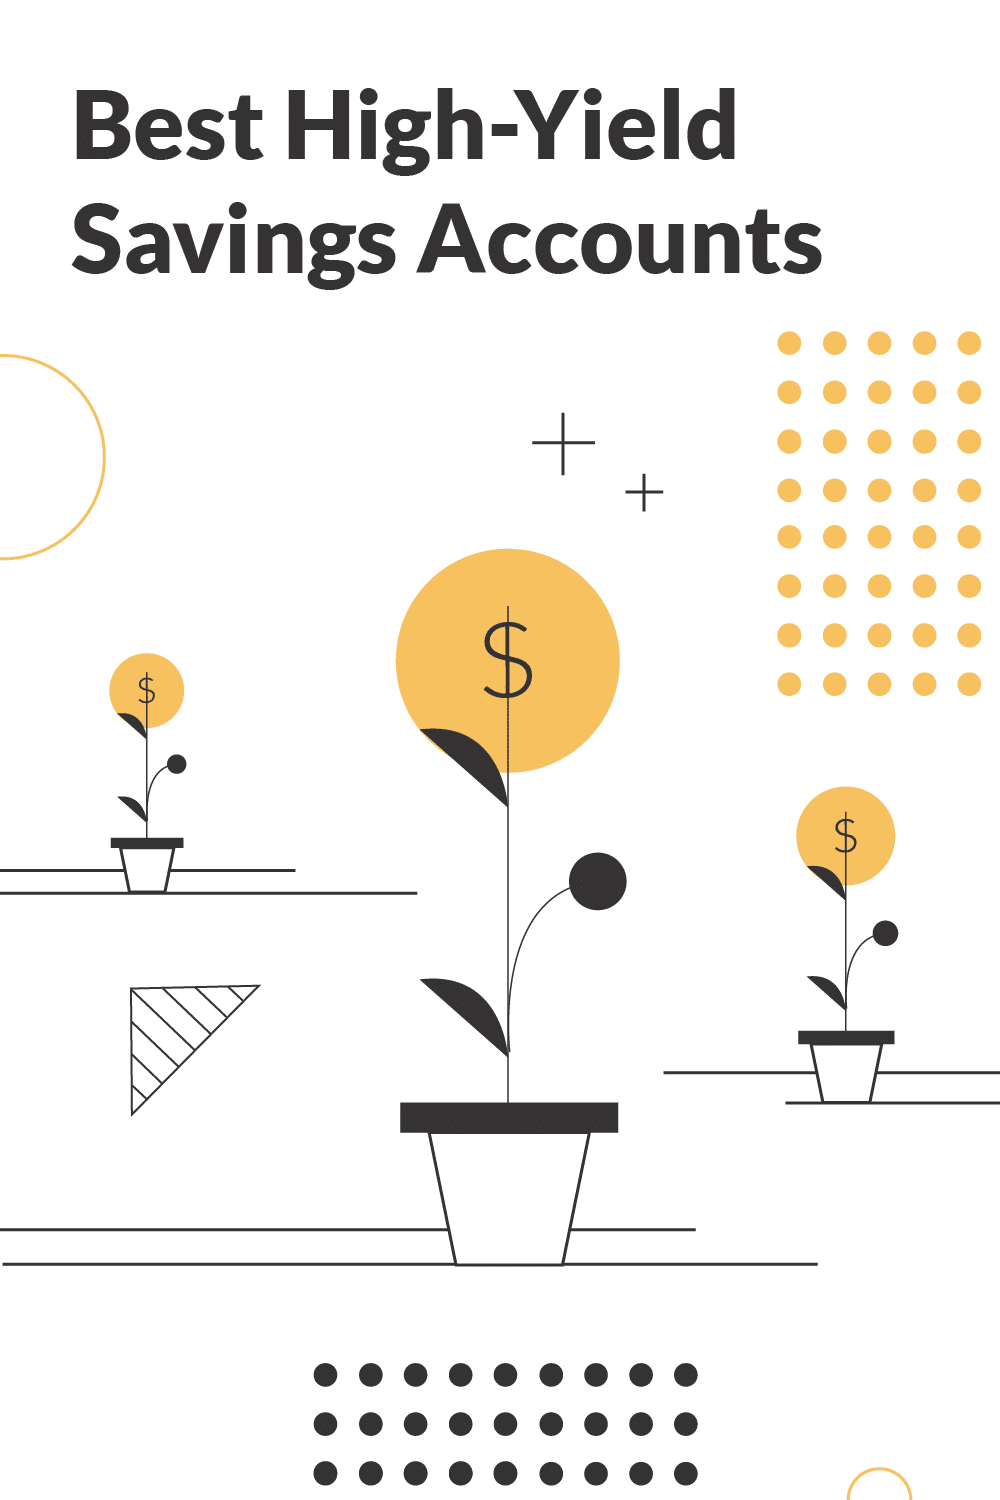 Best High-Yield Savings Account